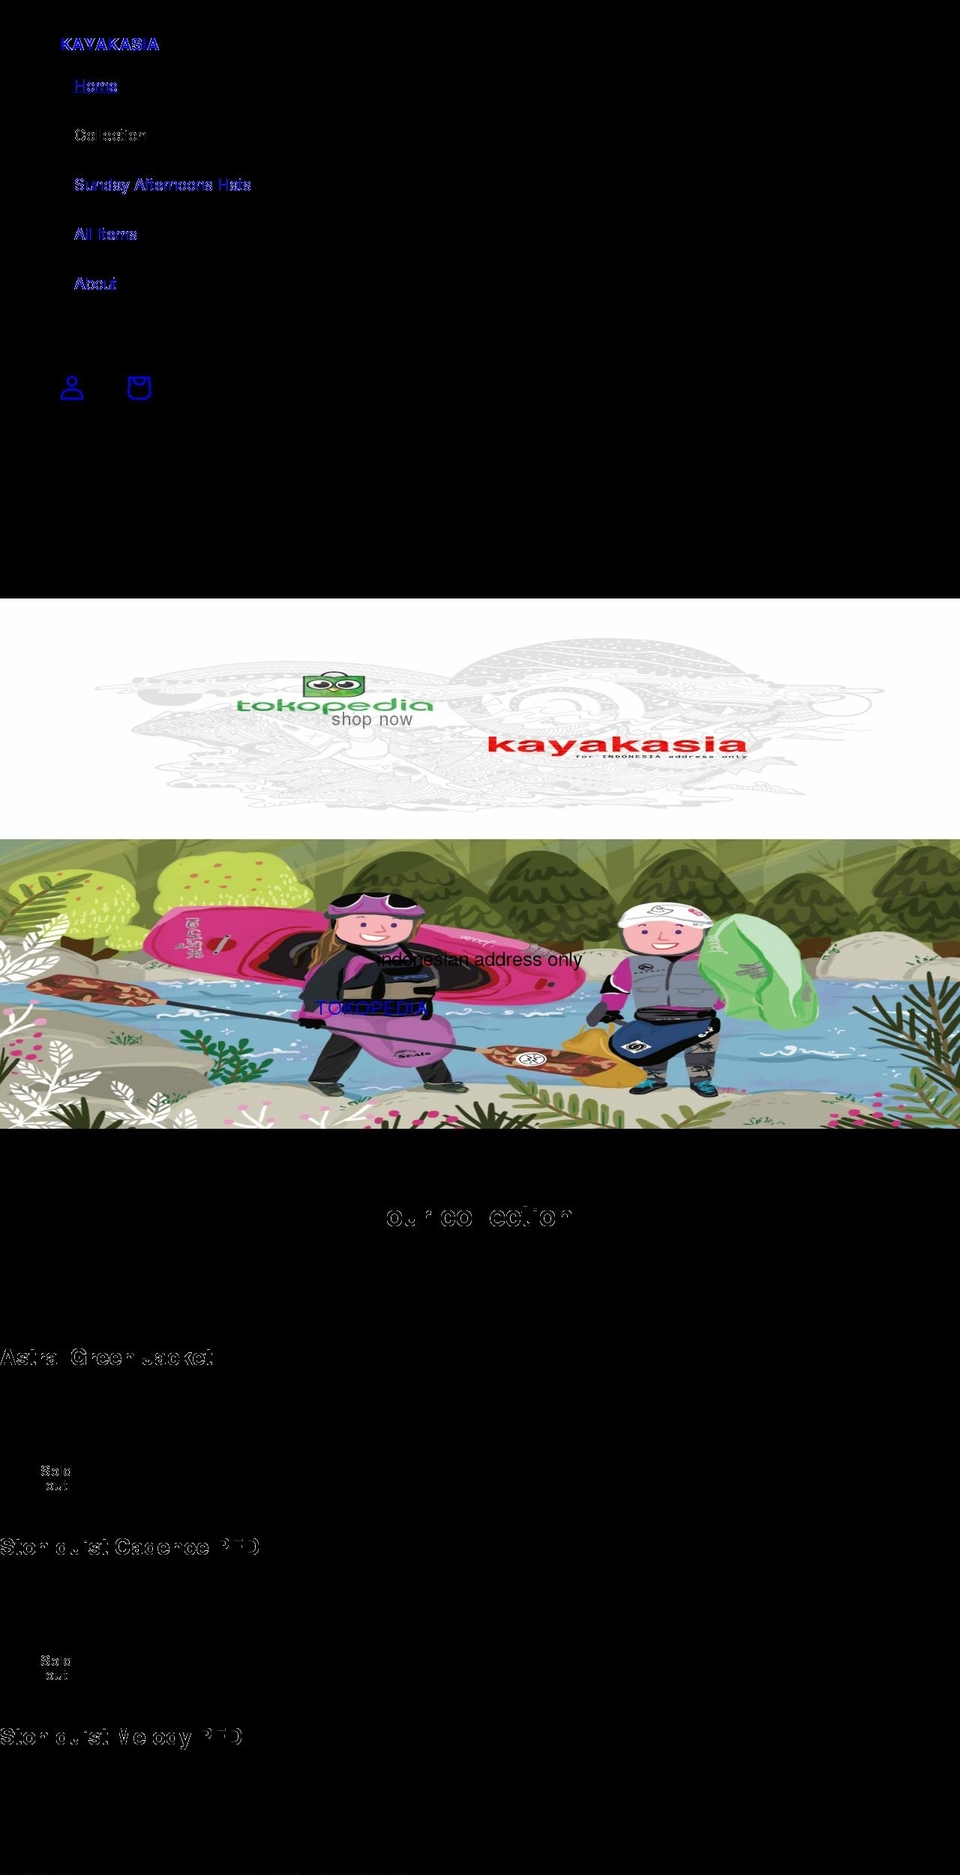 kayakasia.co.id shopify website screenshot